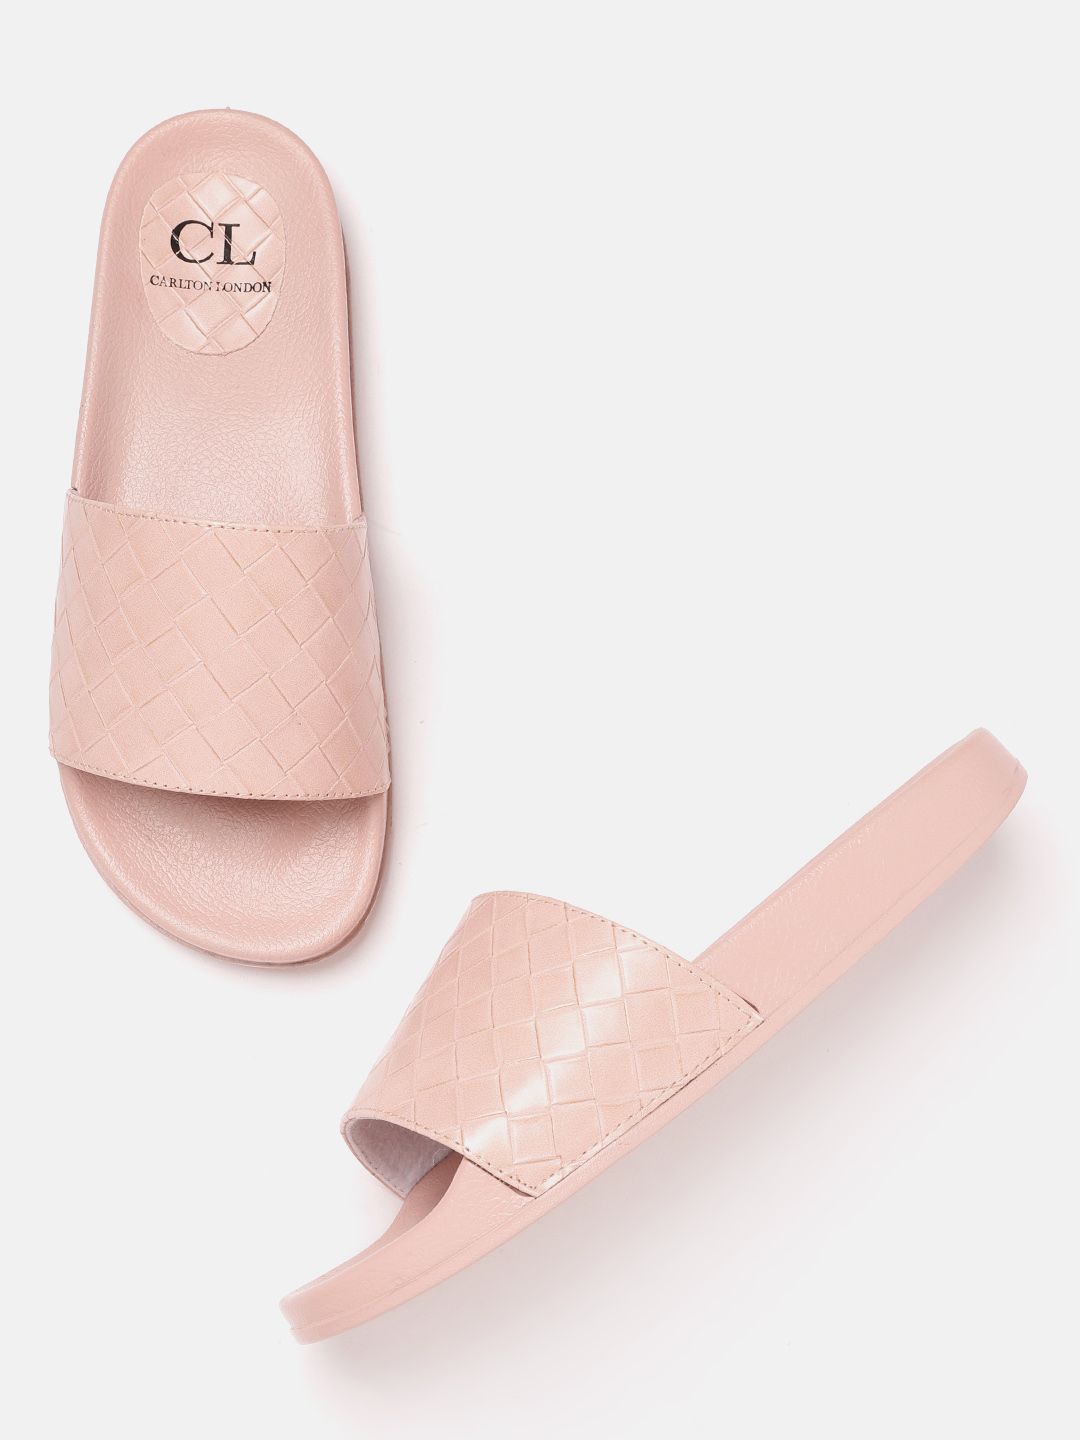 Carlton London Women Pink Basketweave Textured Open Toe Flats Price in India